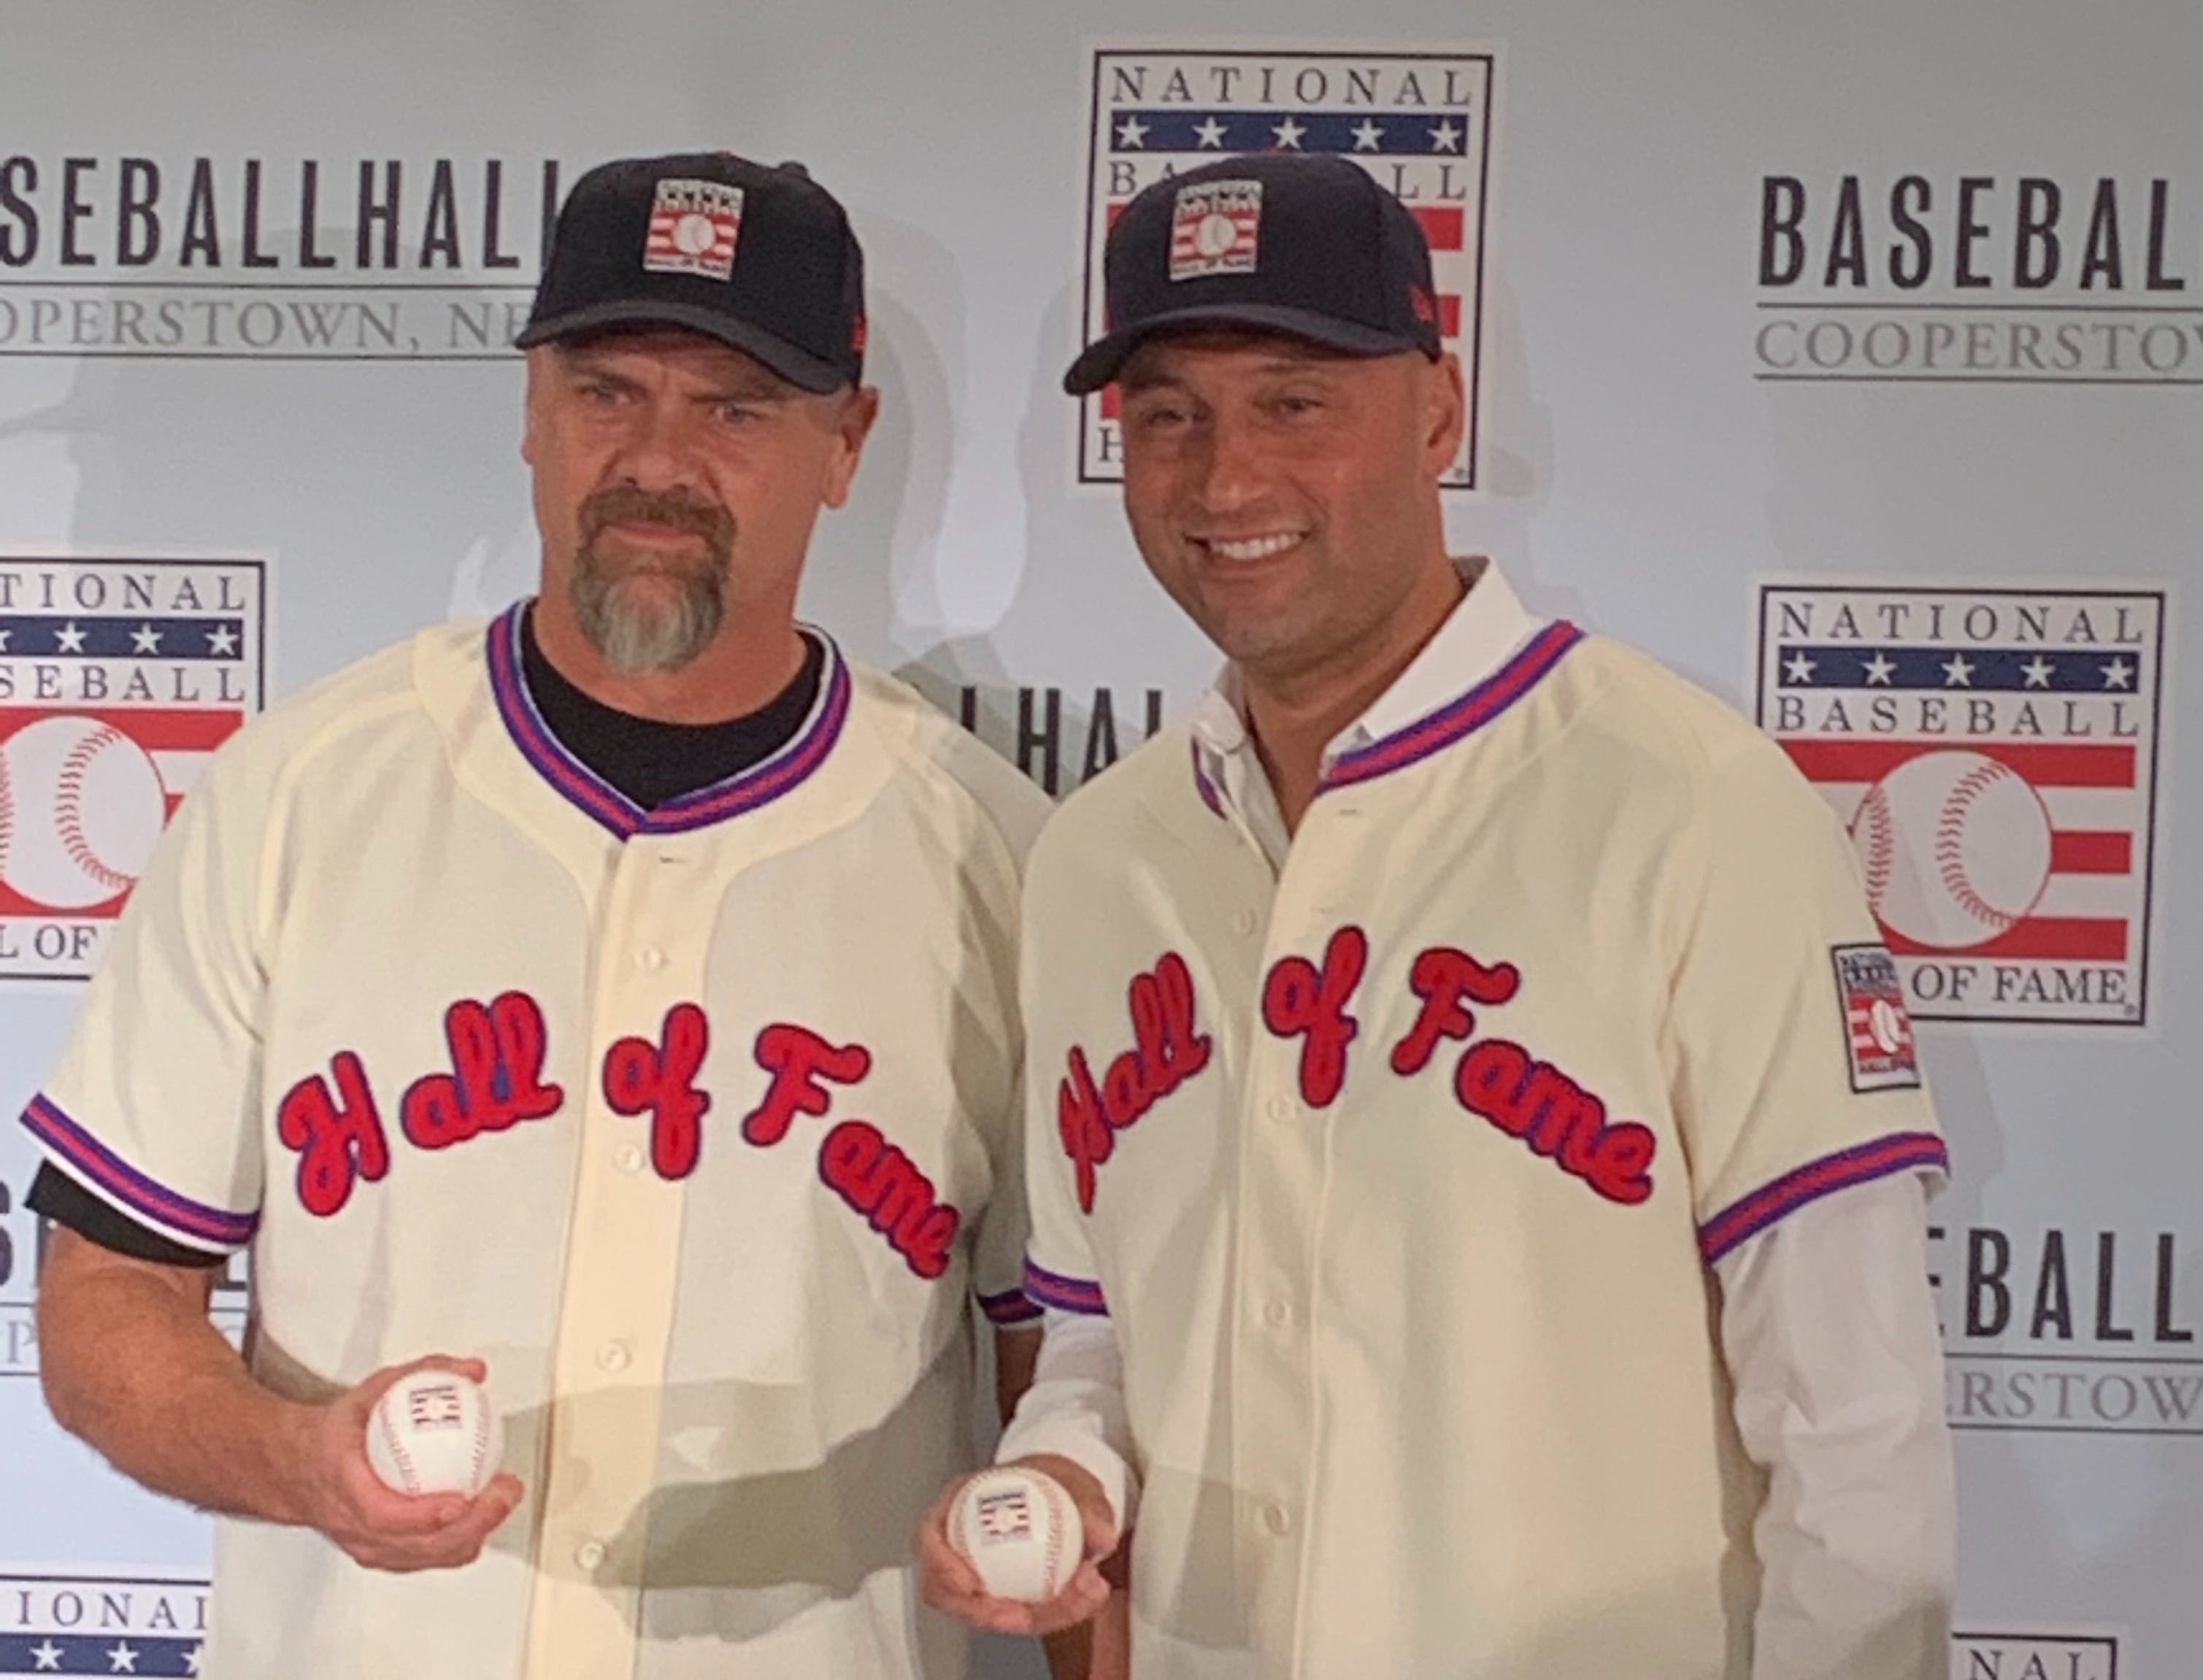 Derek Jeter officially presented as newest Baseball Hall of Famer